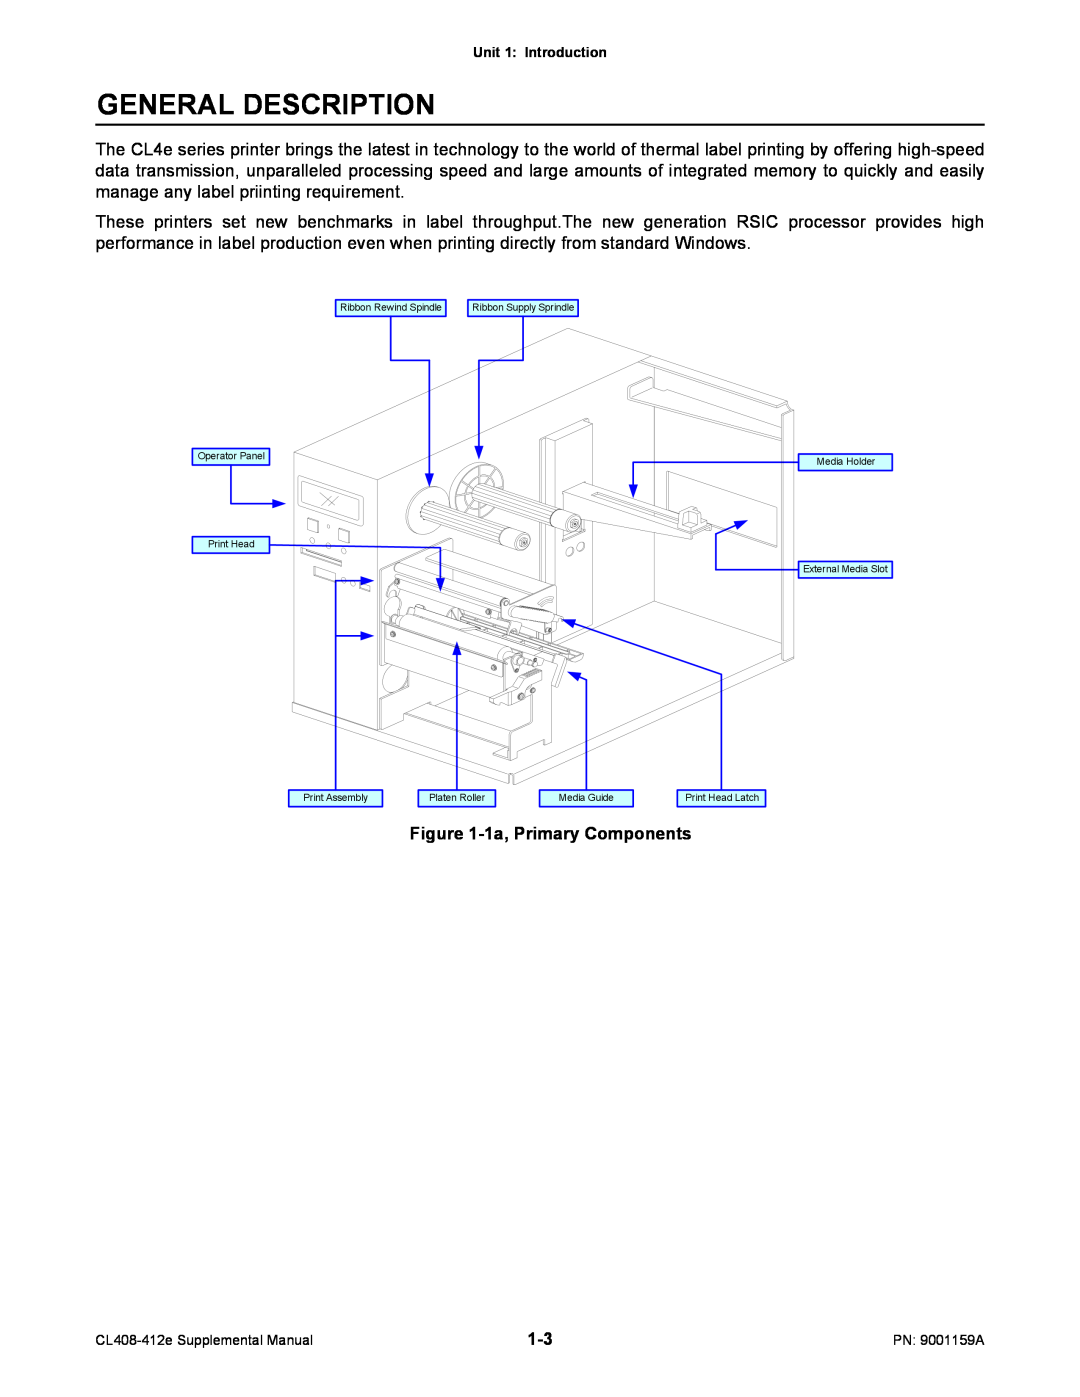 SATO CL408-412e manual General Description, Ribbon Rewind Spindle, Ribbon Supply Sprindle, Operator Panel, Media Holder 